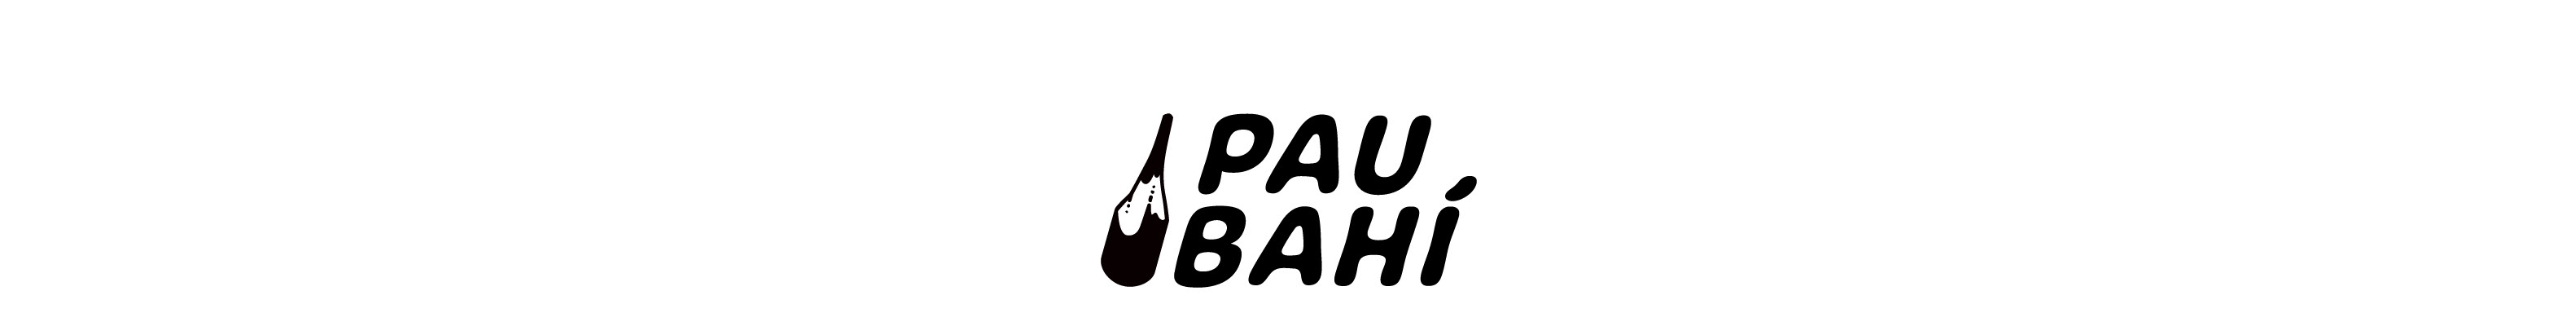 Pau Bahí Segura profil başlığı